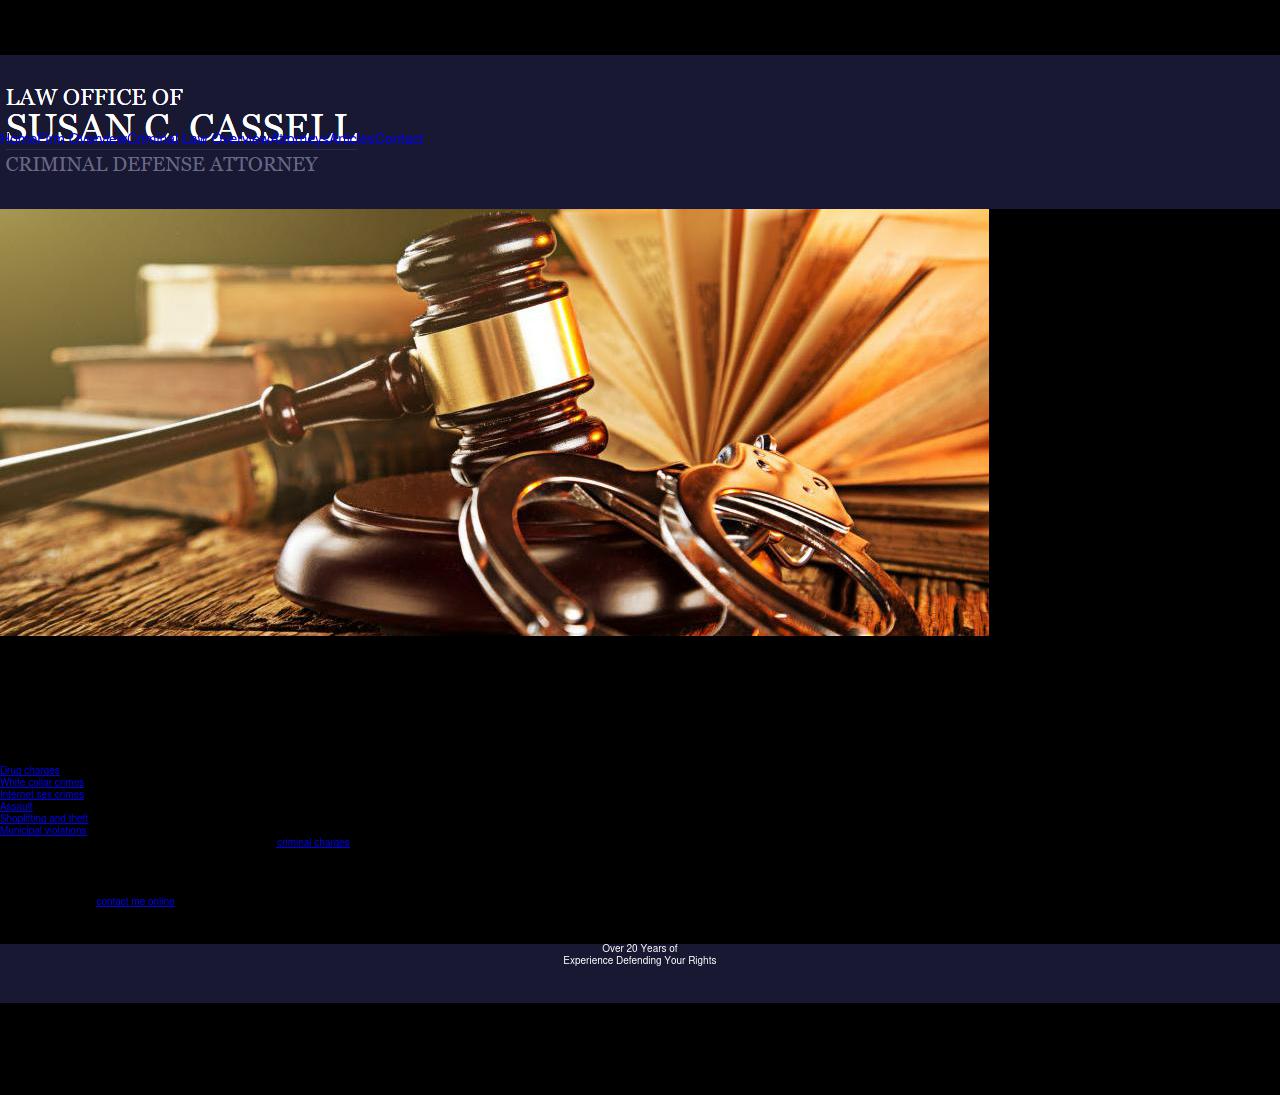 Law Office of Susan C. Cassell - Ridgewood NJ Lawyers